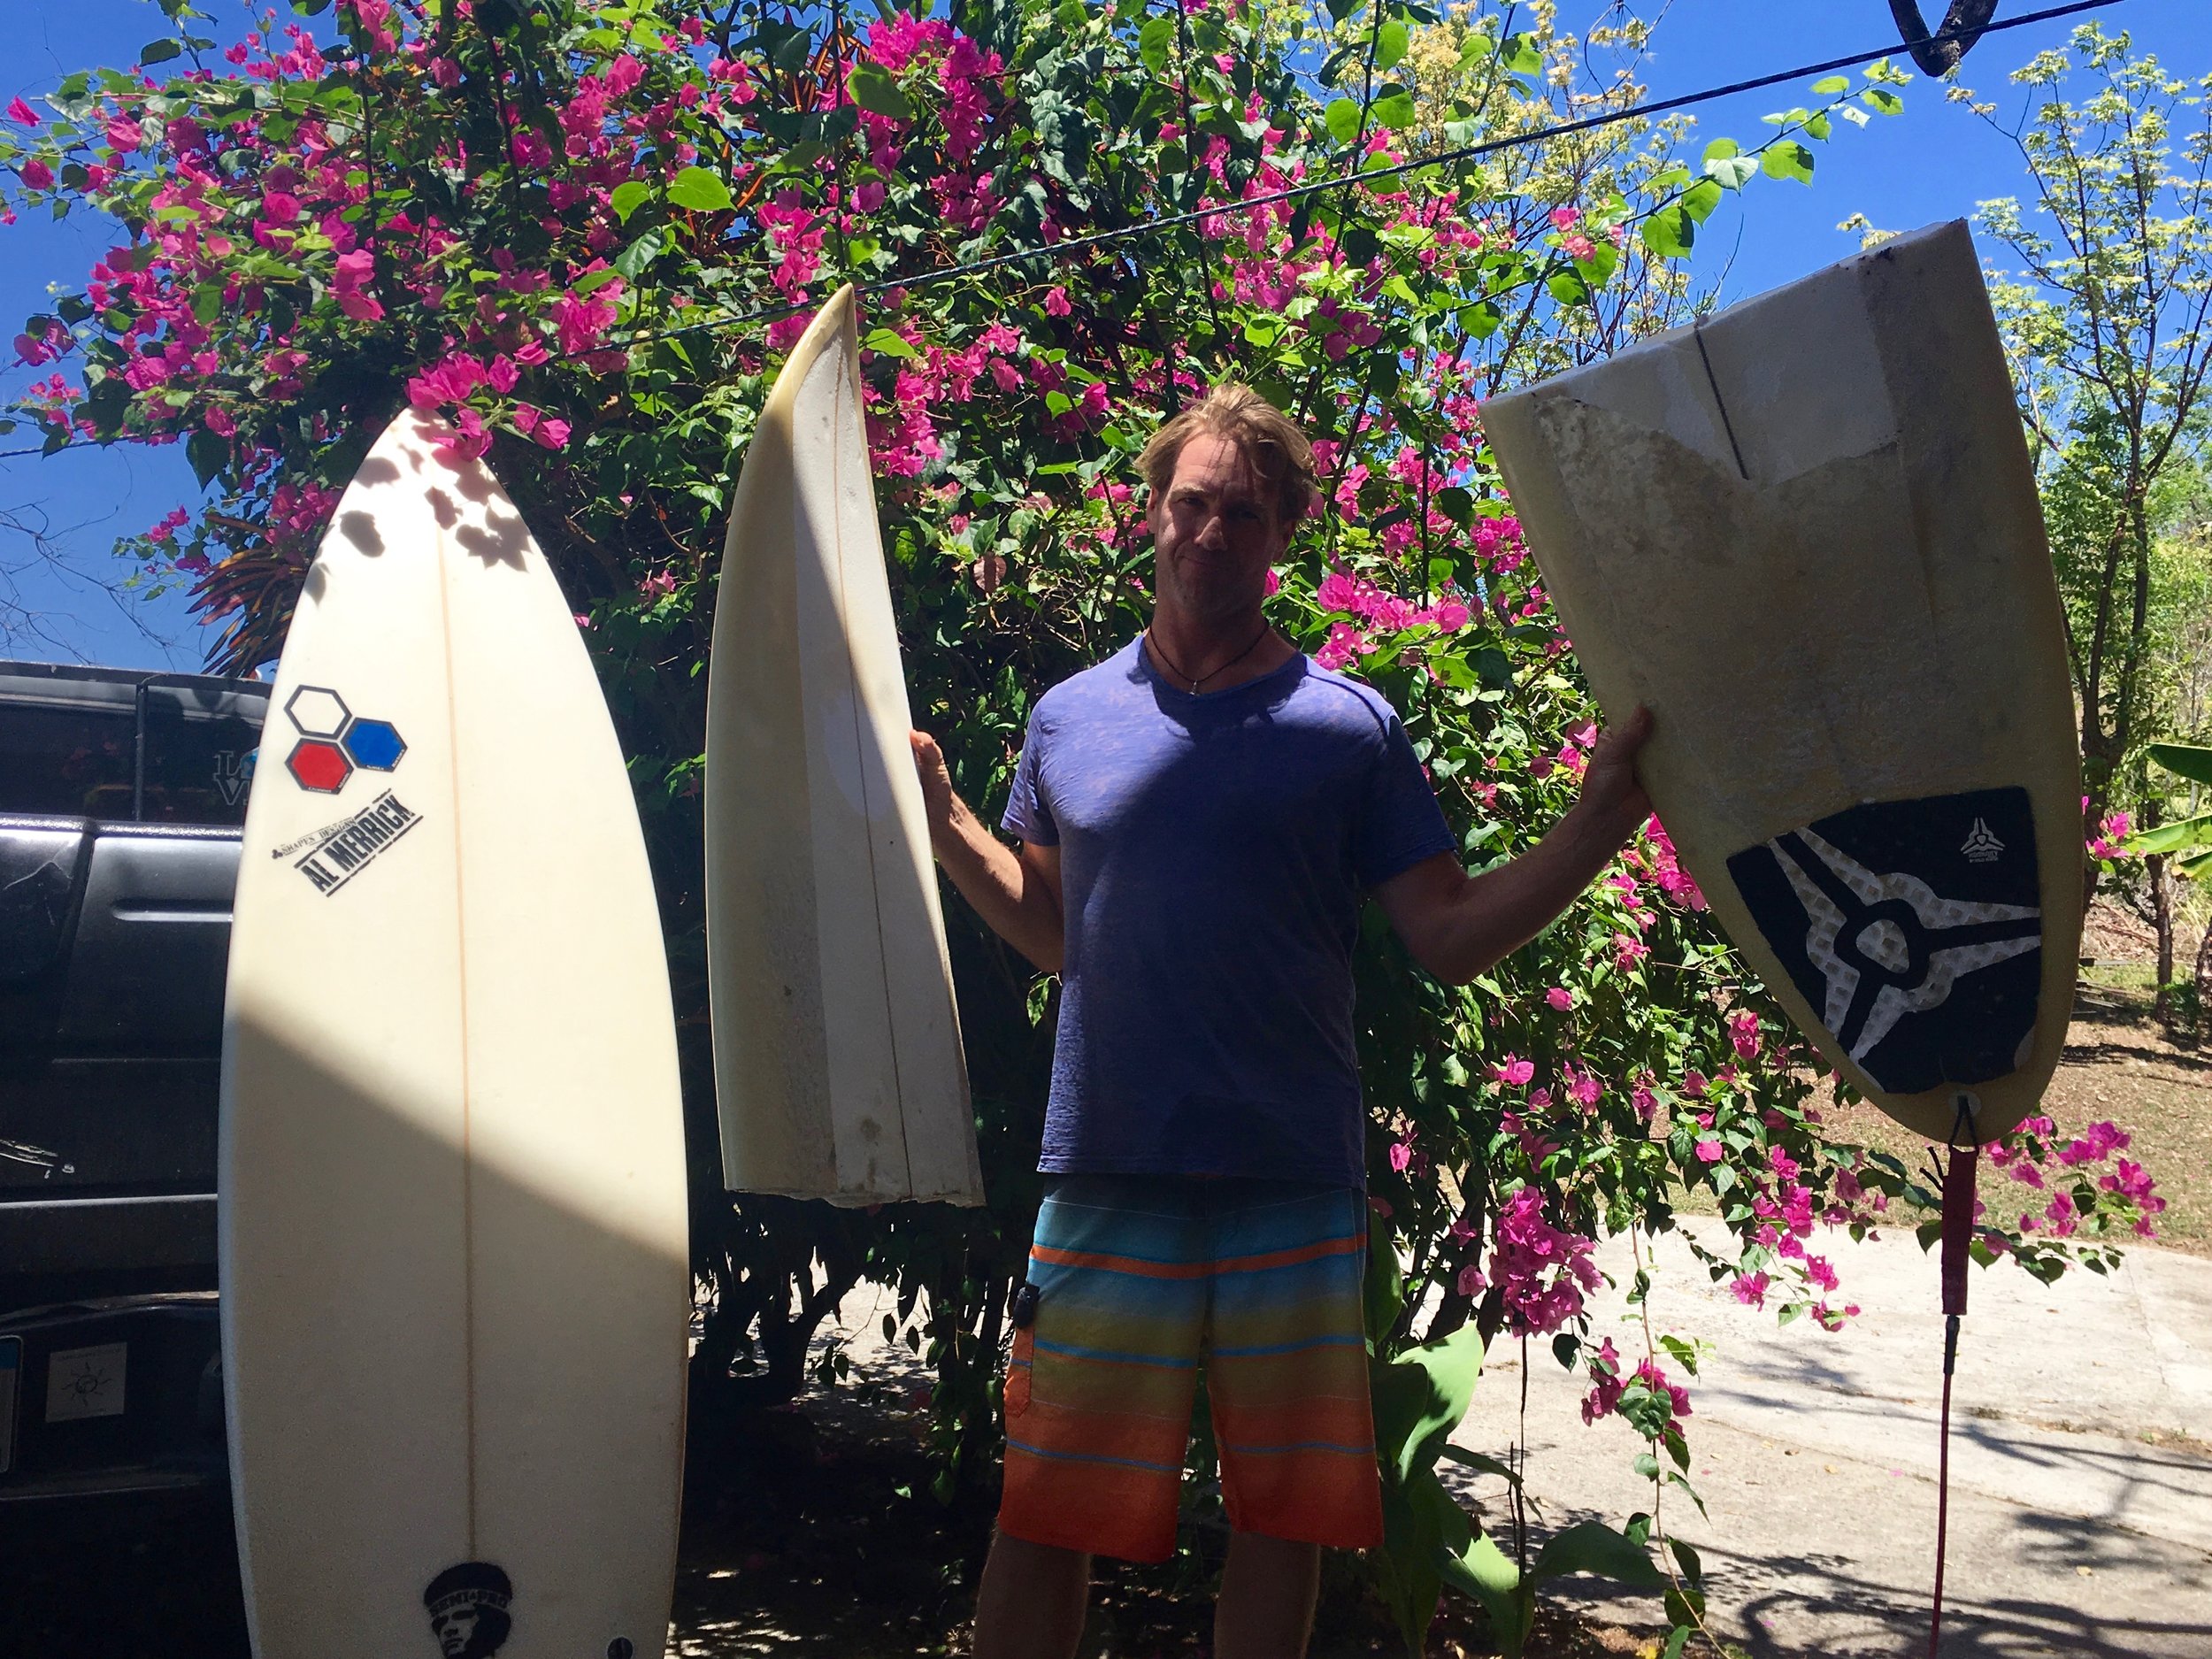 Borken surfboards in Santa Catalina